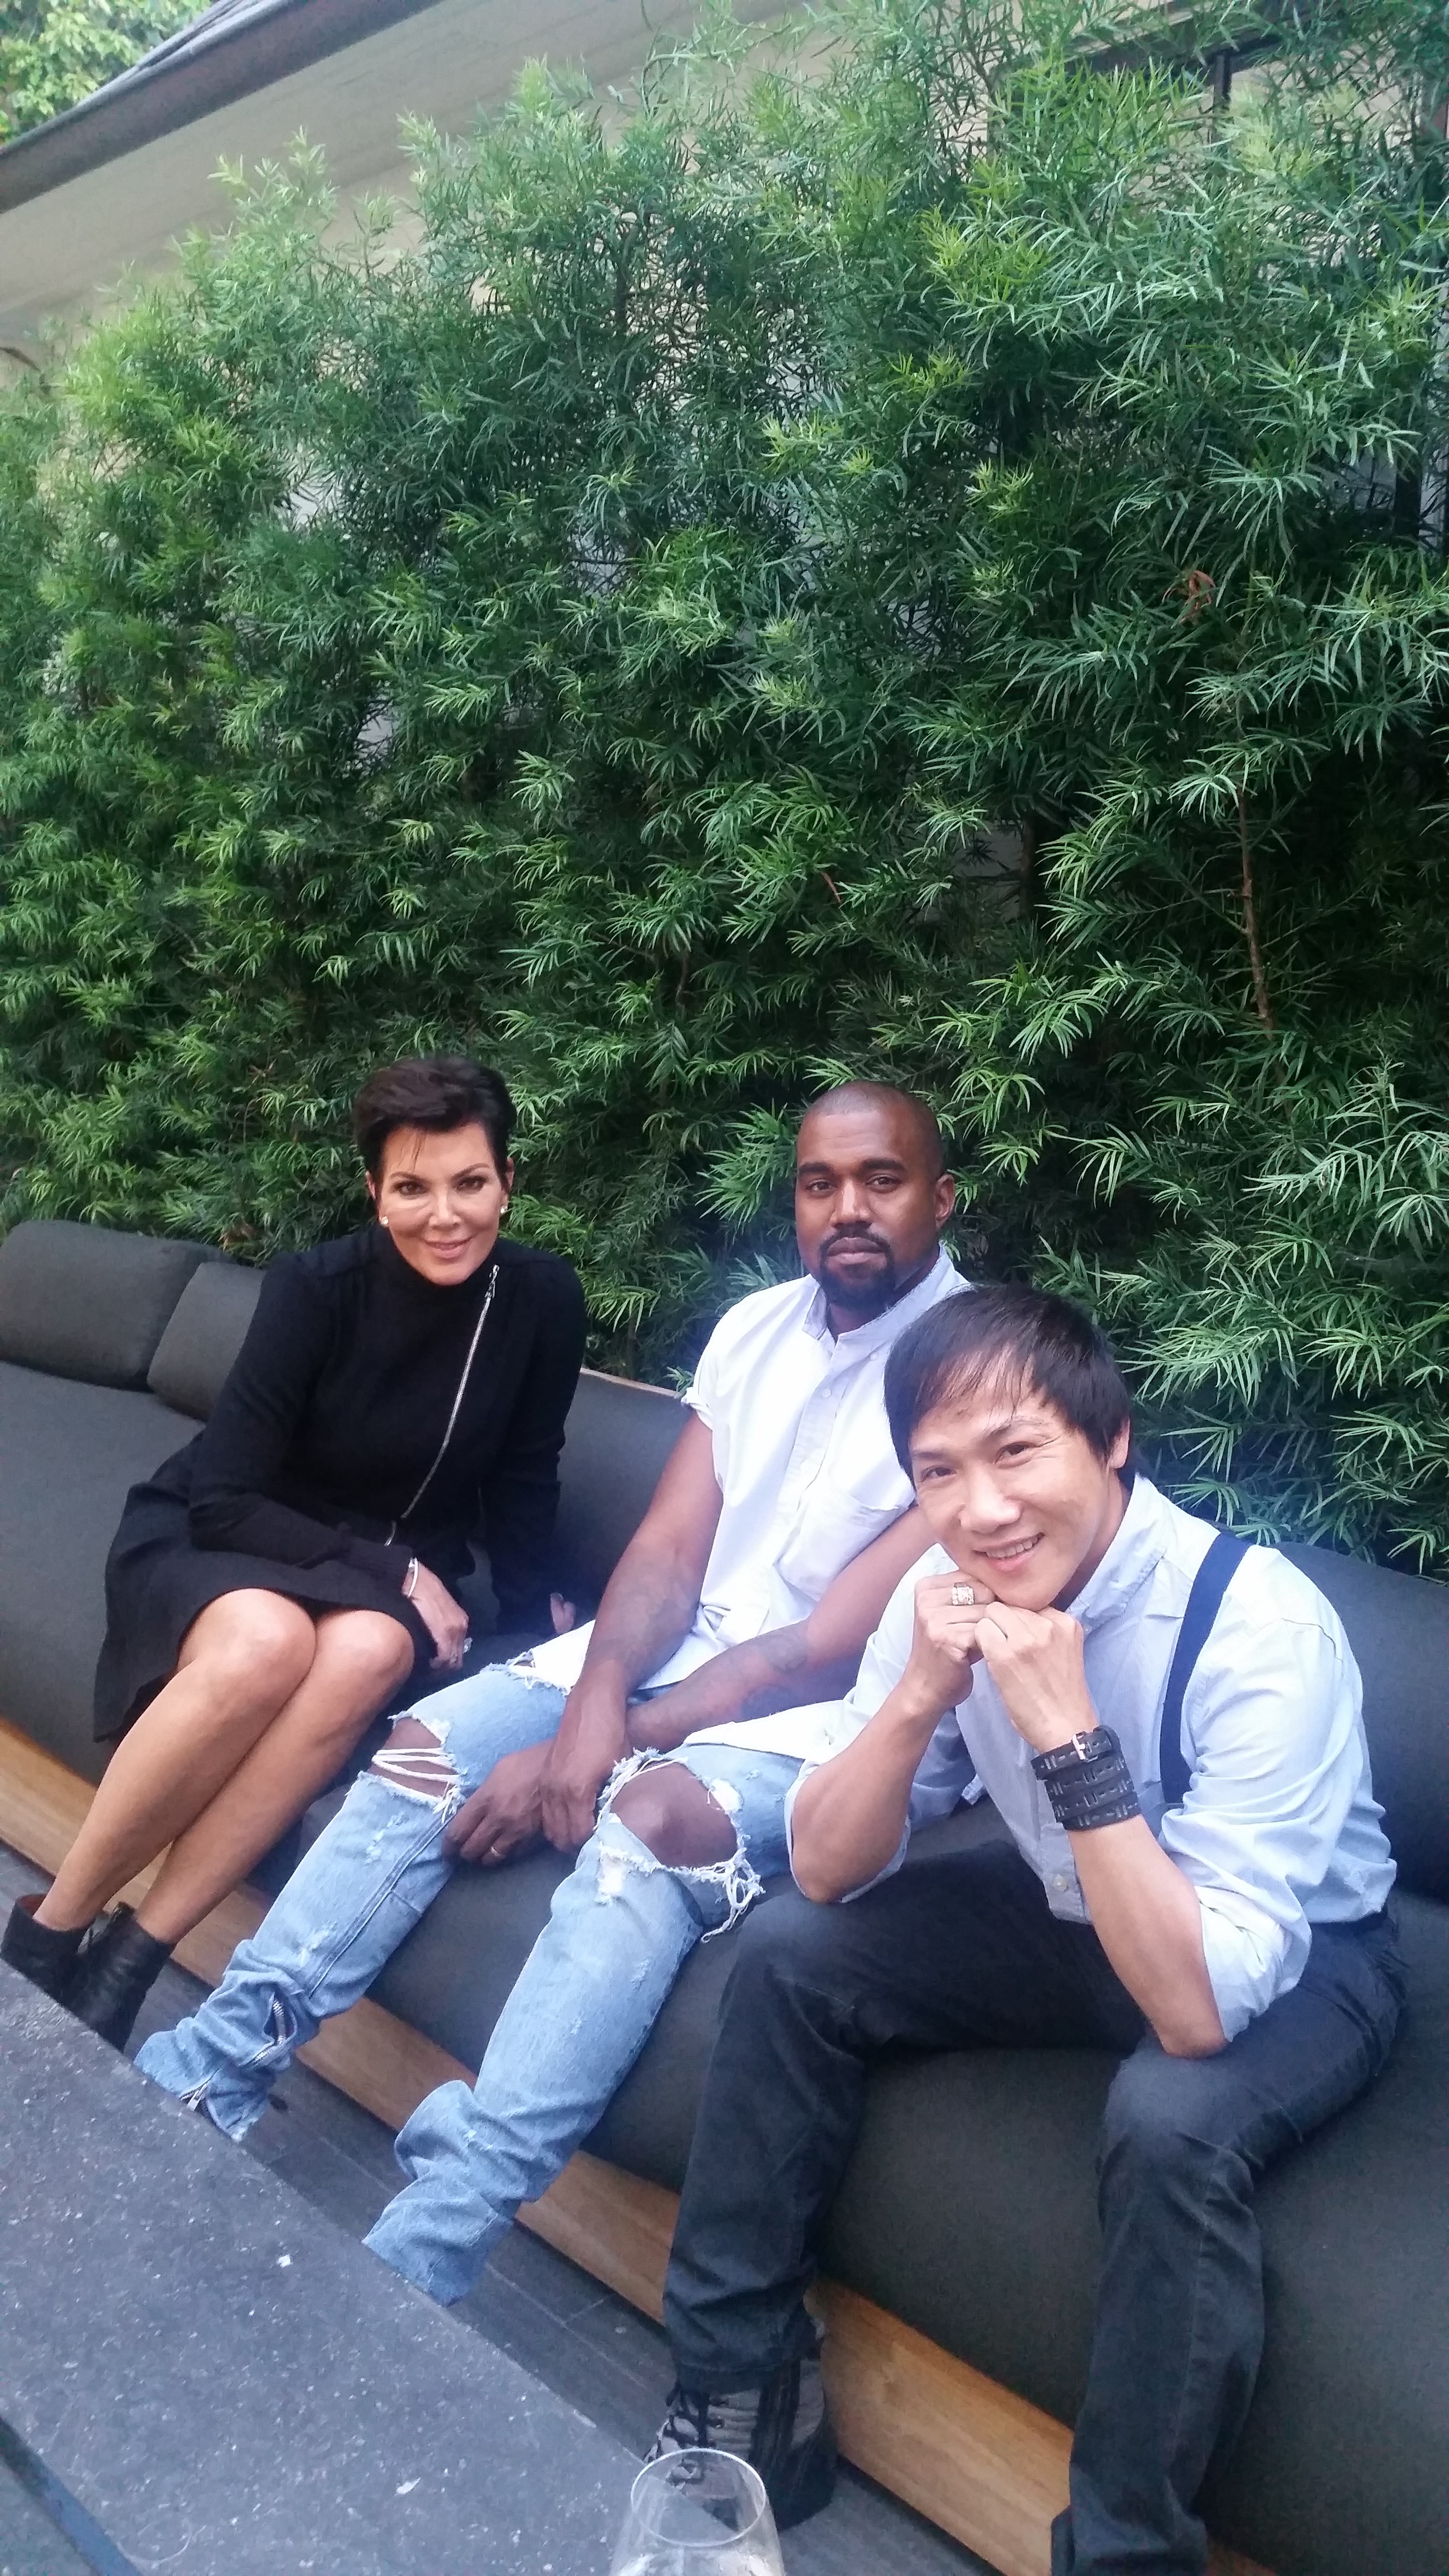 Daniel meeting Kris Jenner ( Kim kardashian's Mom) at Hillary for America even on August 6th, 2015